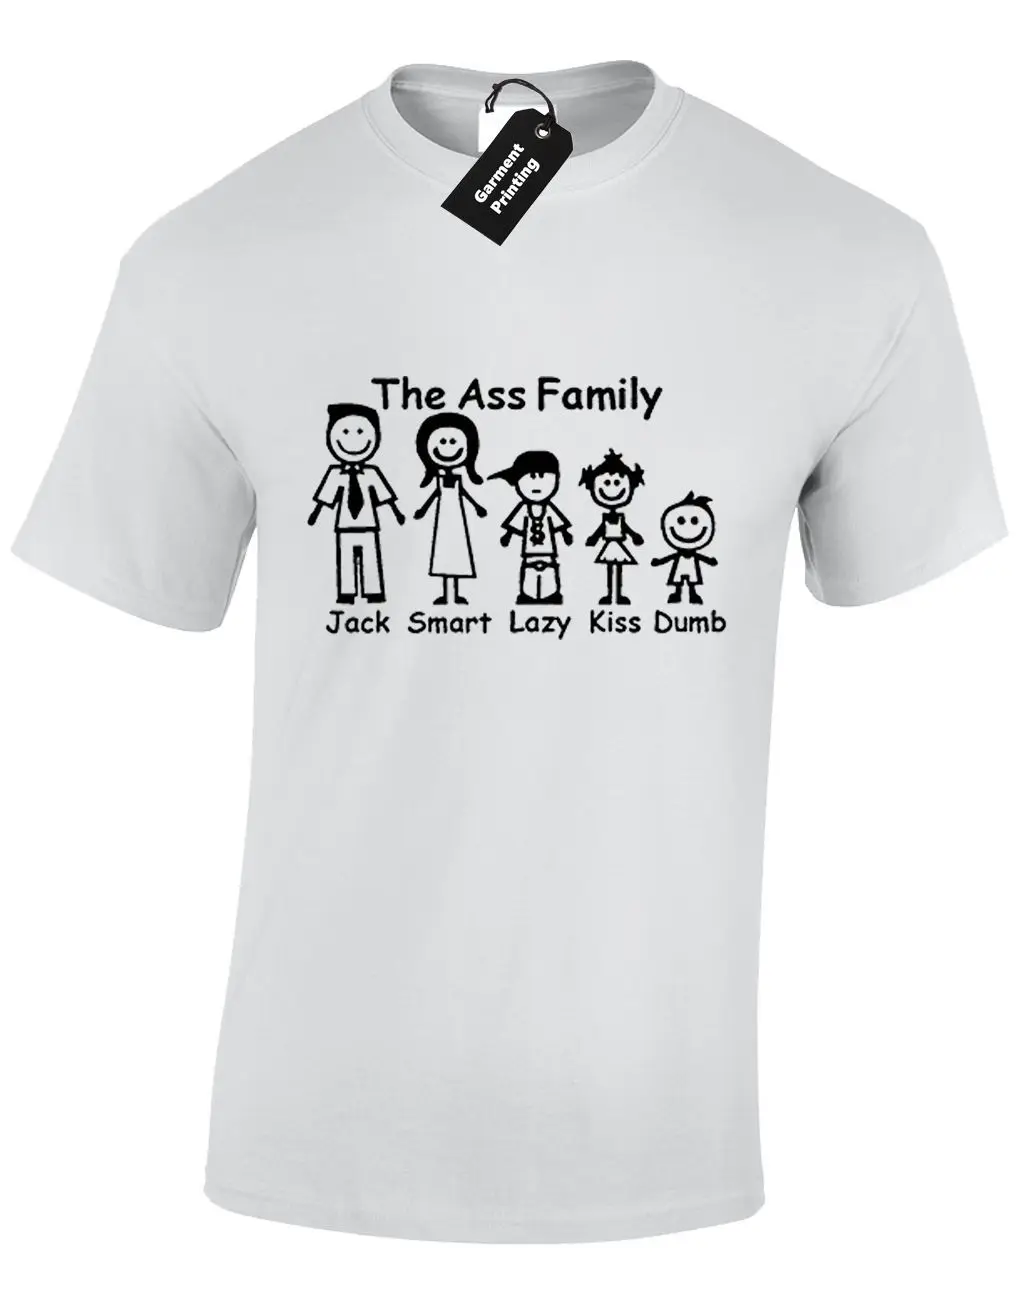 Семейная Мужская футболка с надписью THE ASS забавная новая качественная